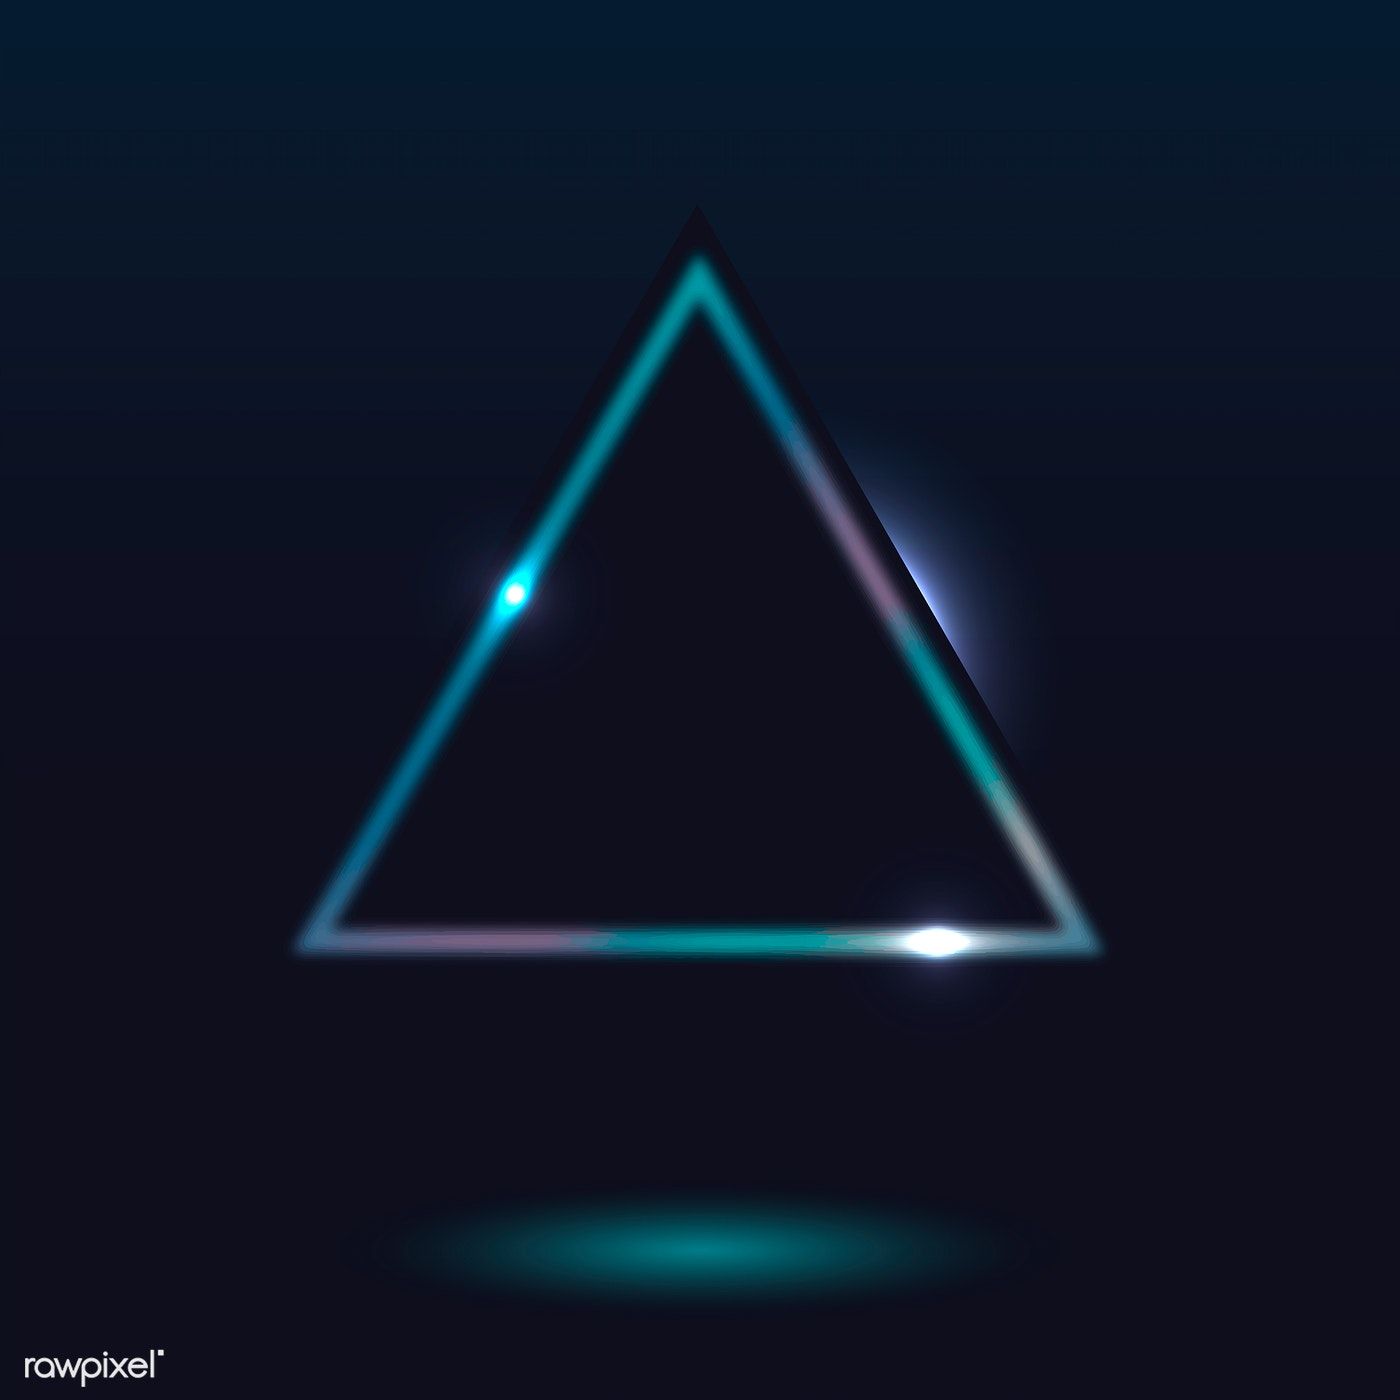 Retro neon triangle badge vector. free image